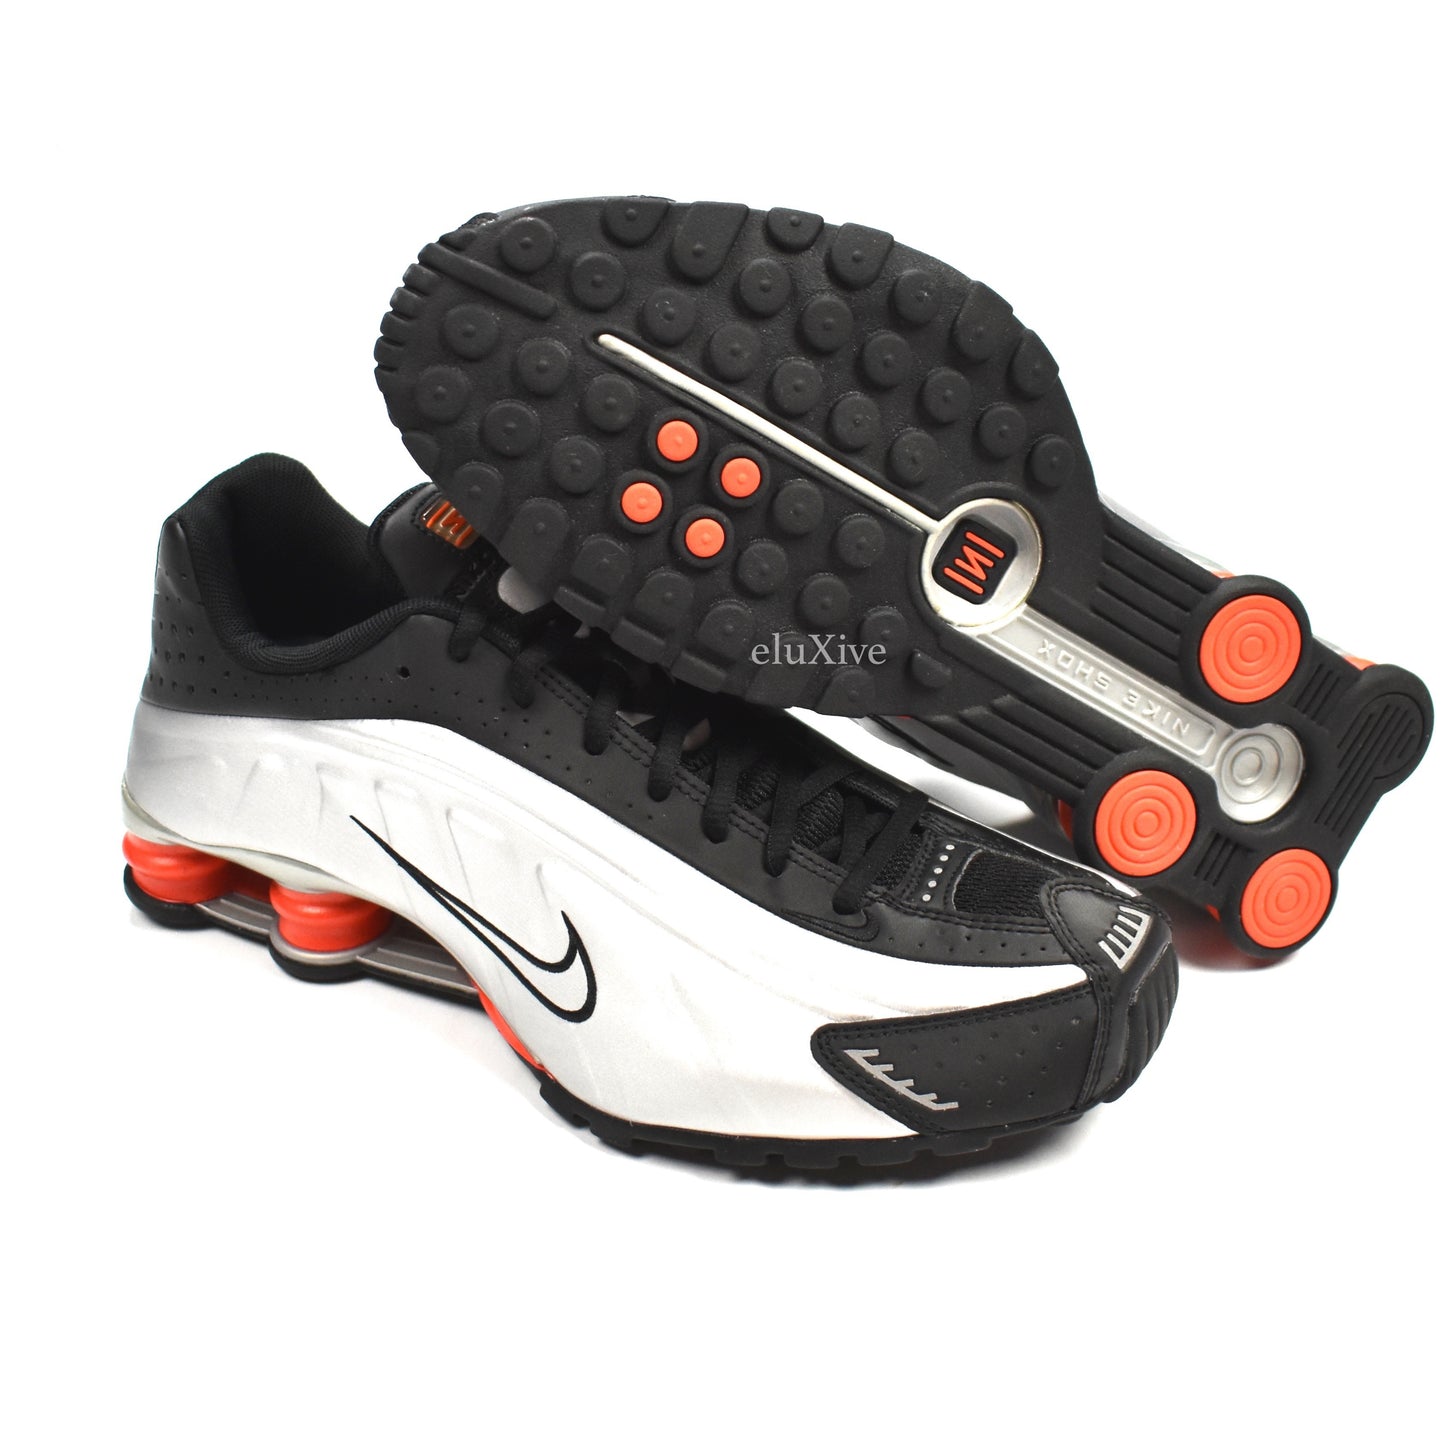 Nike - Shox R4 OG (Black/Silver/Orange)